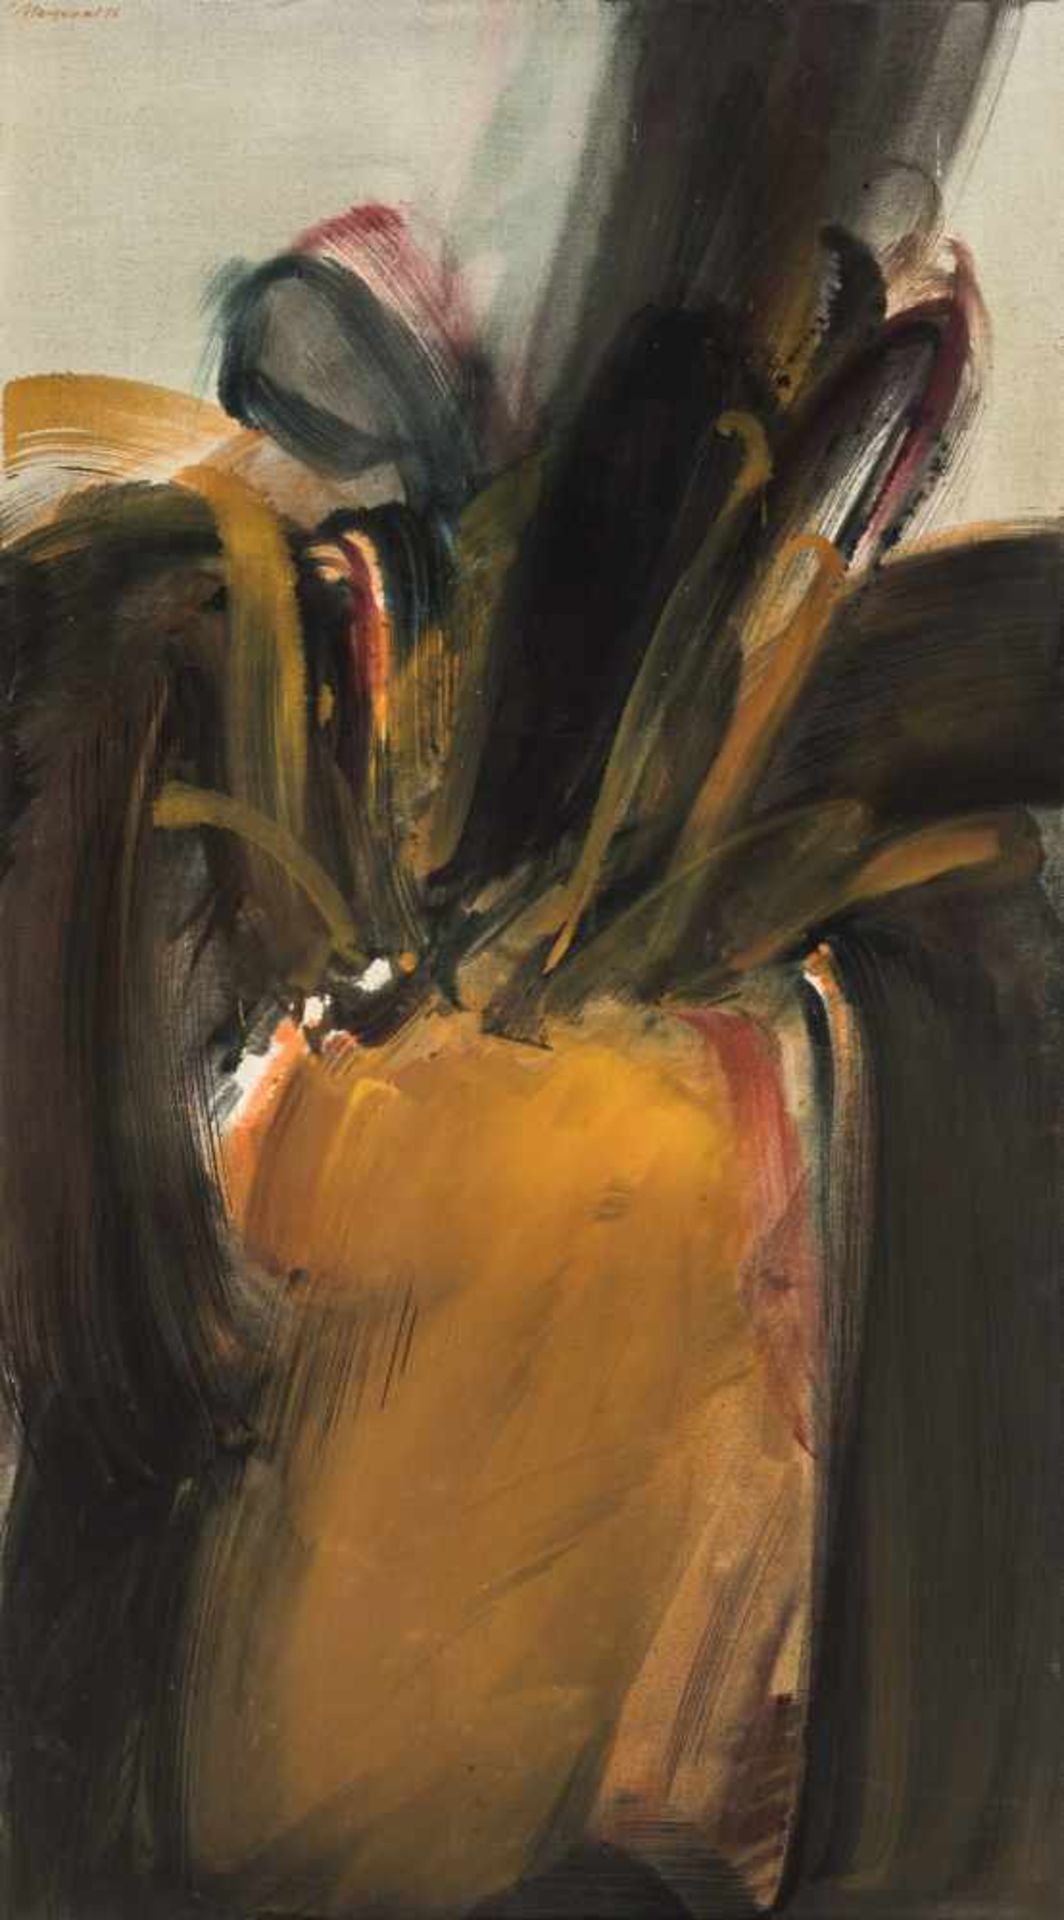 Peter Marquant (hs art)Wien 1954 *AgaveÖl auf Leinwand / oil on canvas170 x 95 cm1978links oben